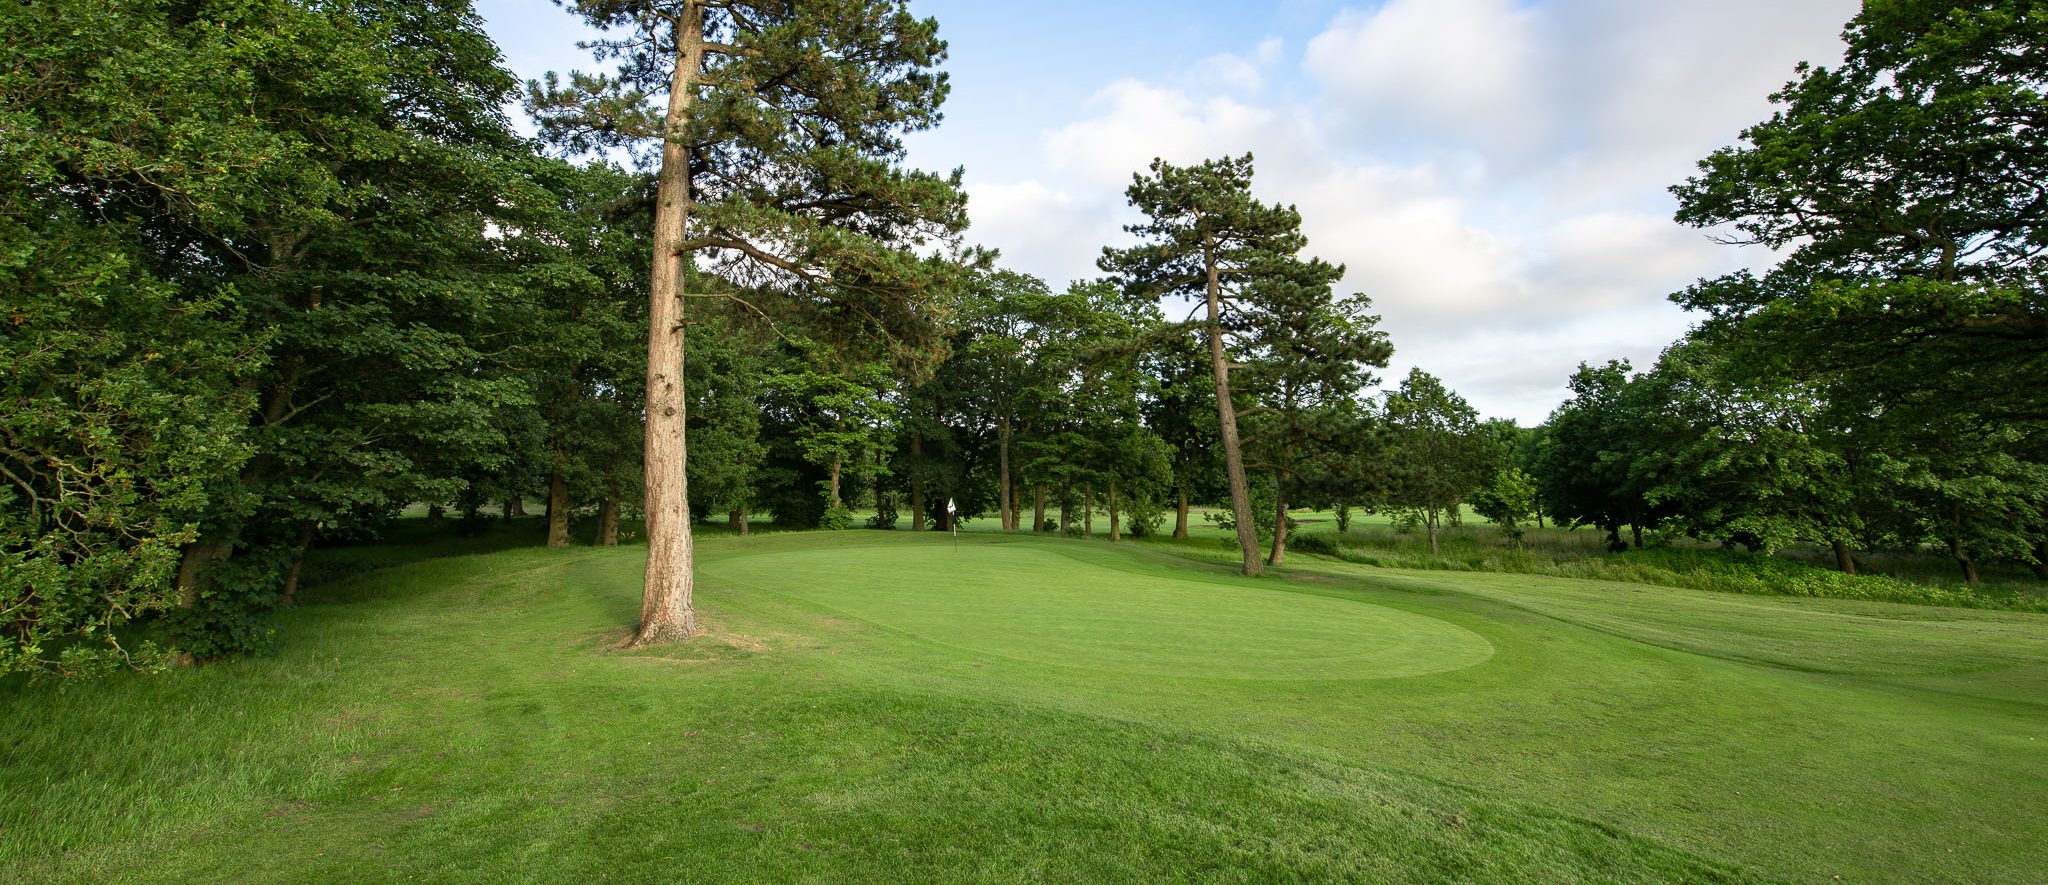 Project Update – Duxbury Park Golf Course